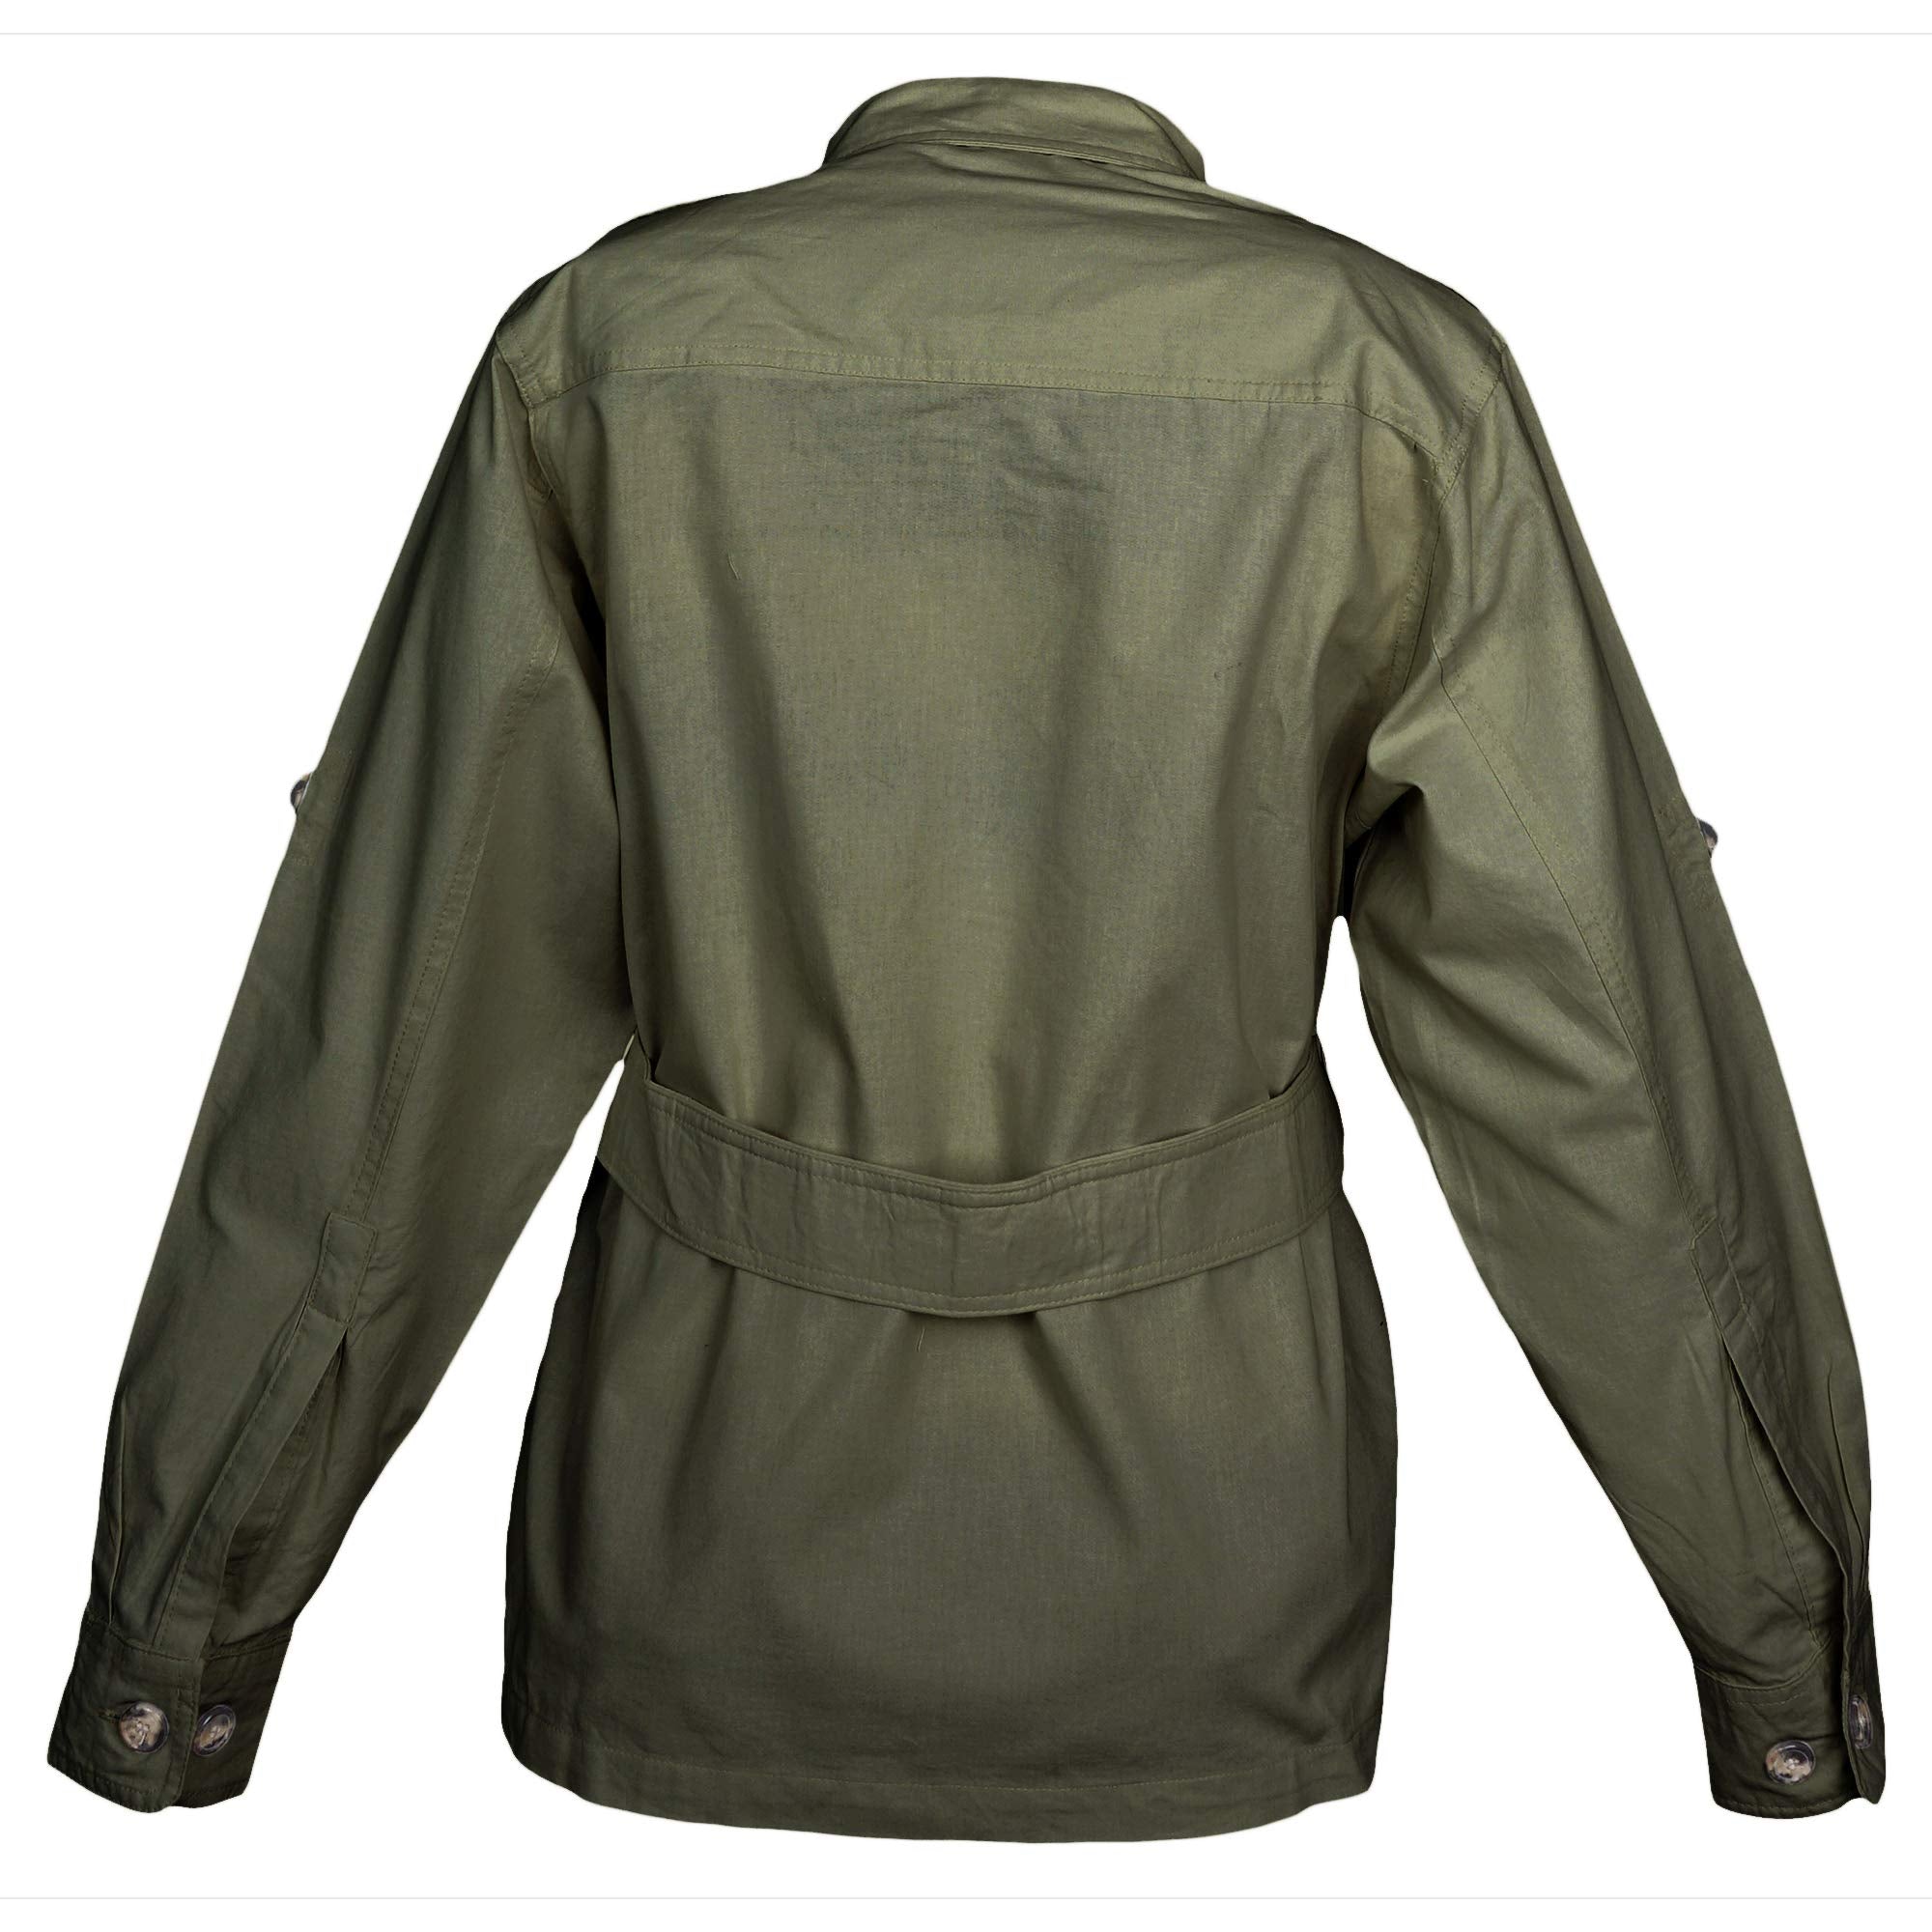 Tag Safari Women's Safari Vest with Covered Oversized Pockets (Stone, Medium)